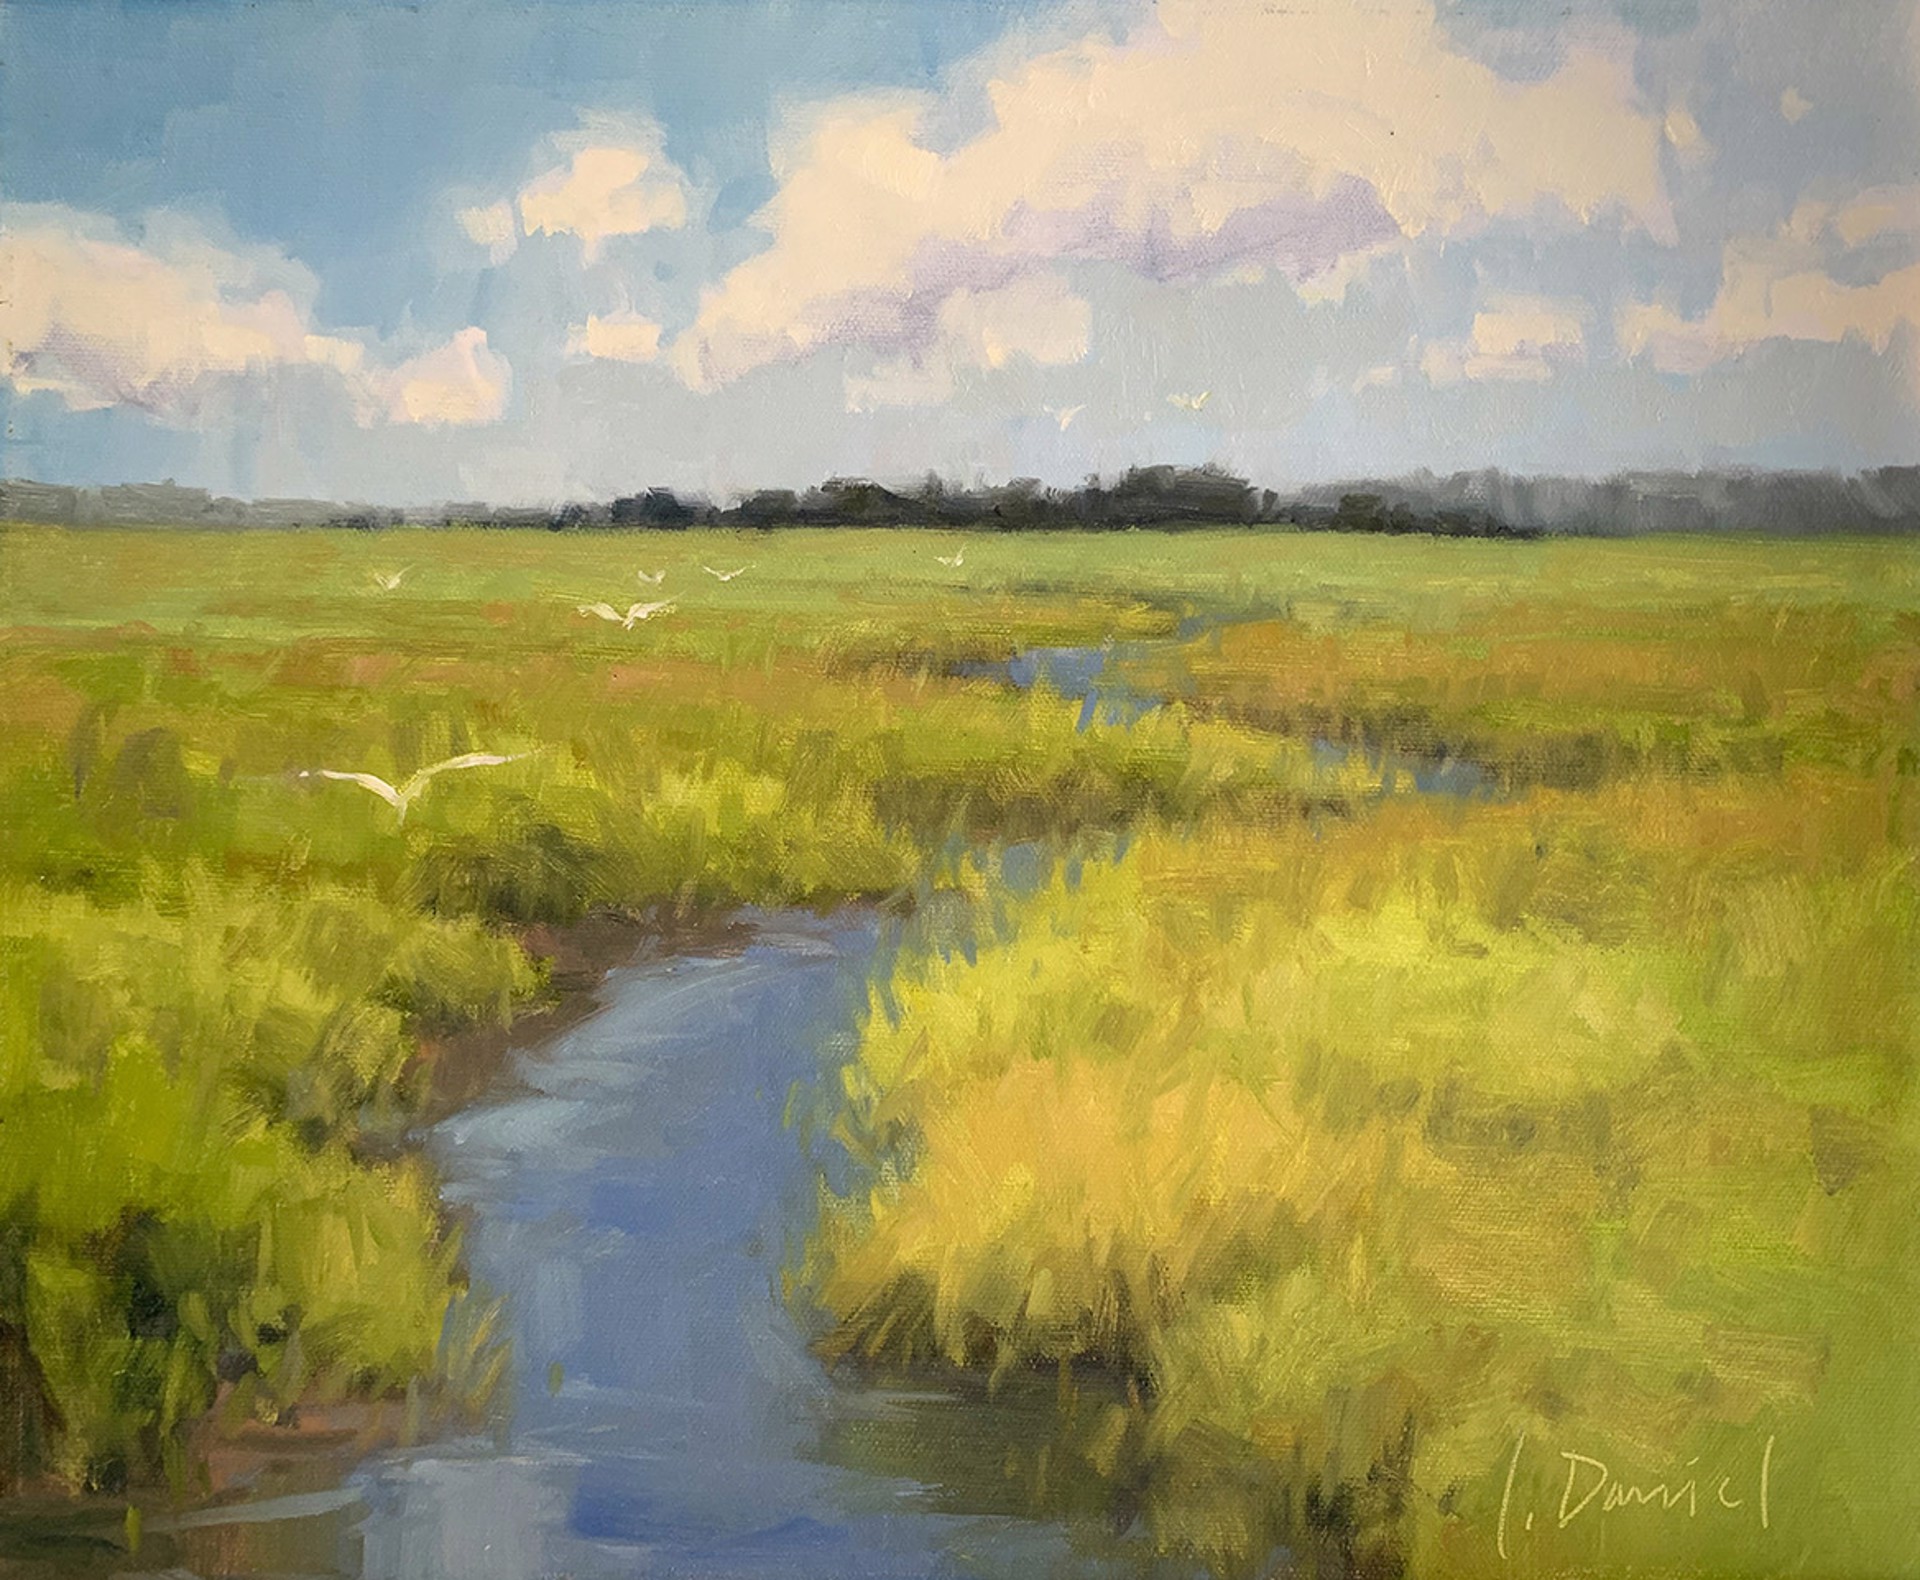 Call of the Marsh by LAUREL DANIEL